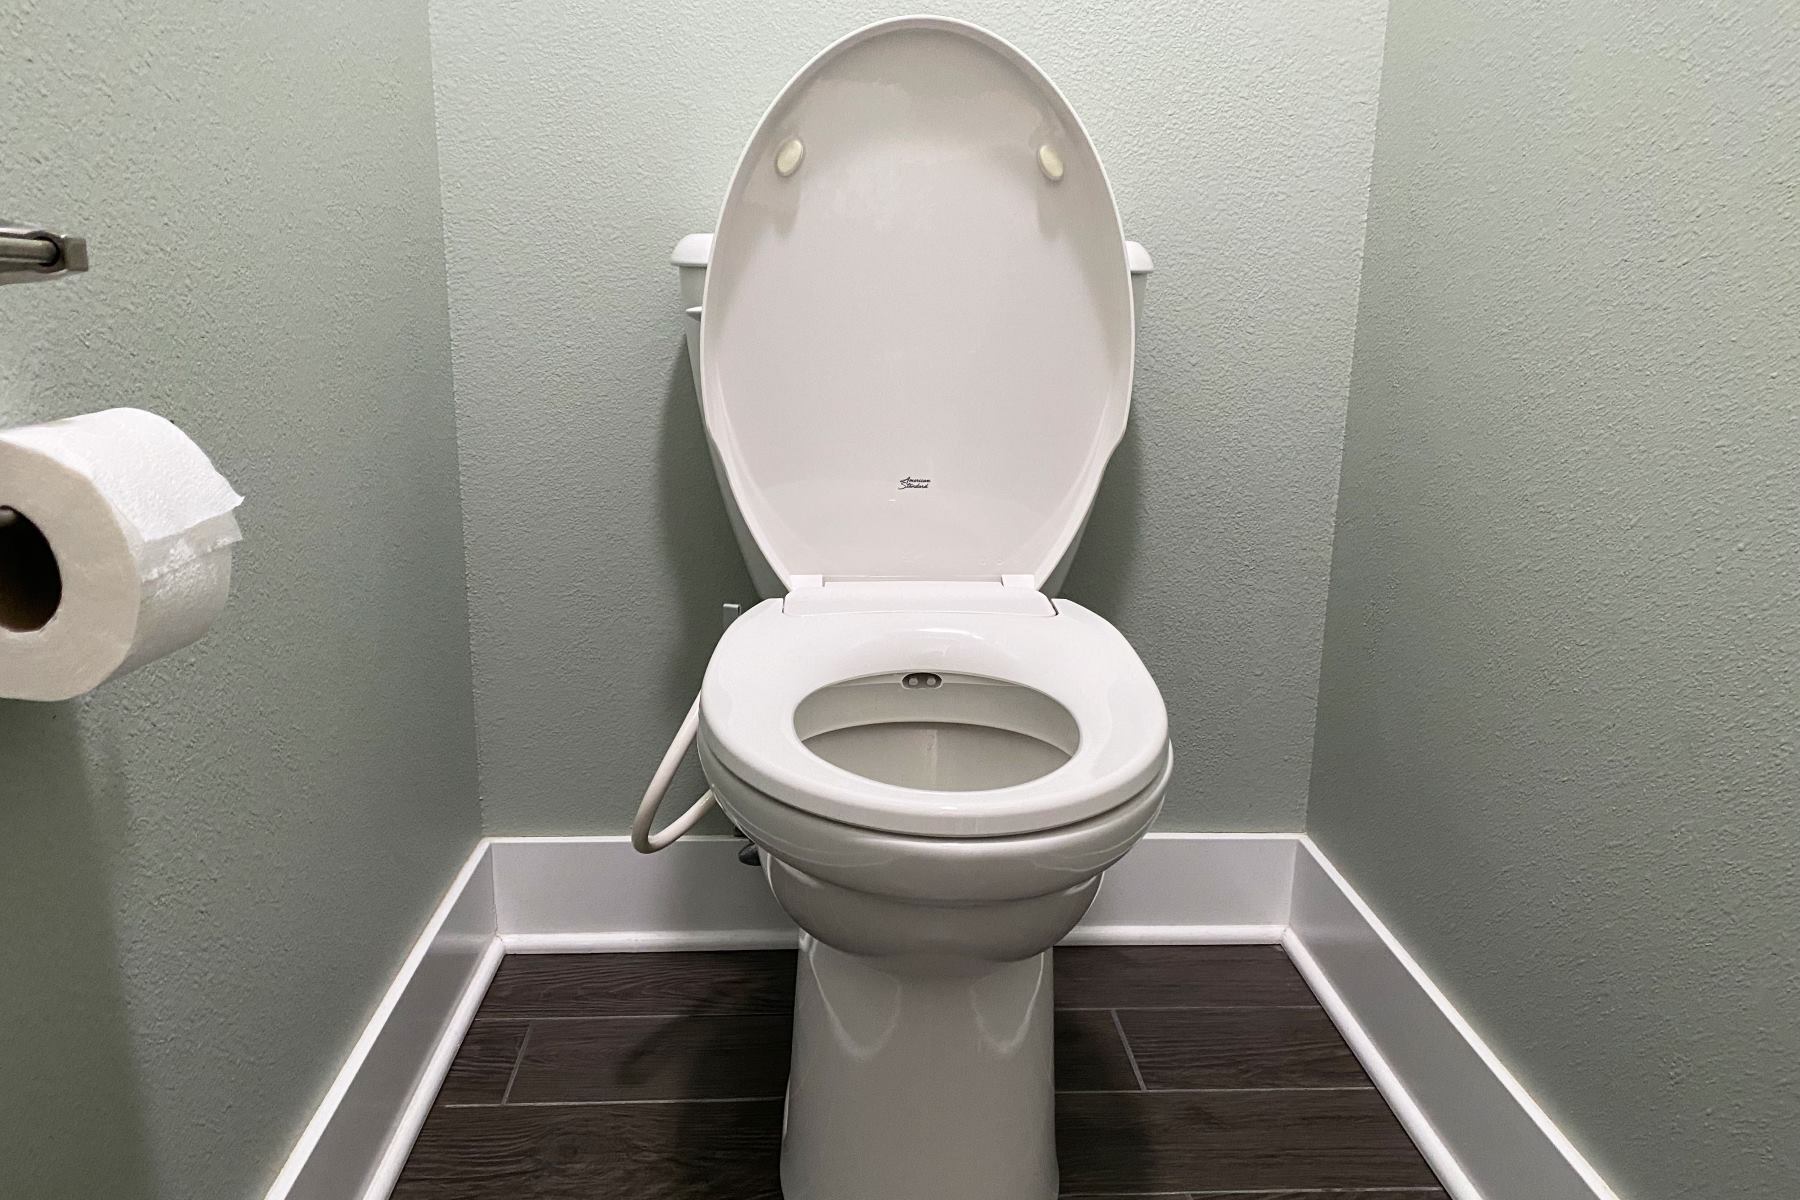 How To Install Bidet On Tankless Toilet